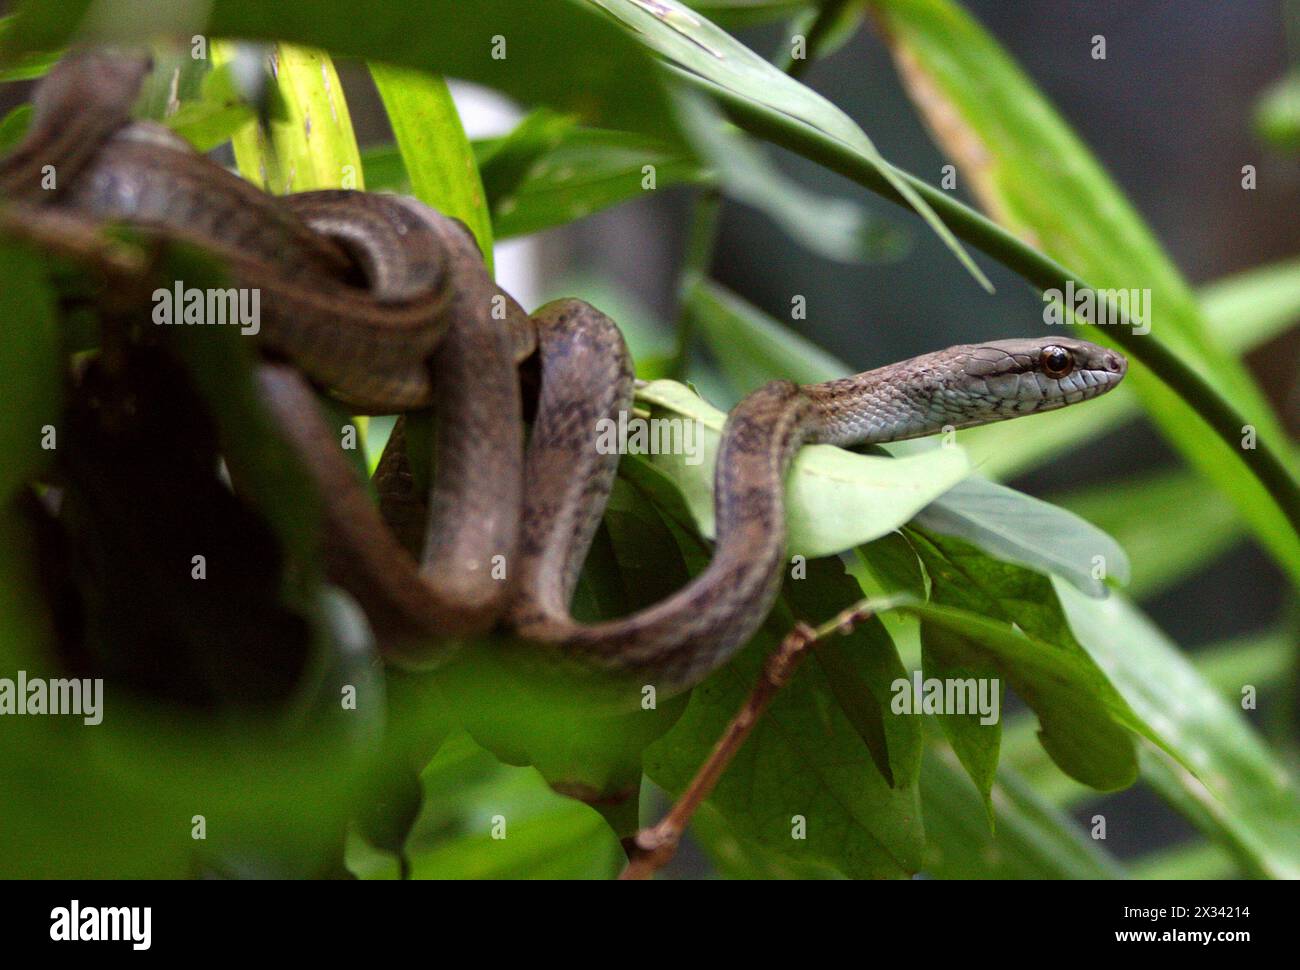 Racer à ventre de saumon, Mastigodryas melanolomus, Colubridae. Monteverde, Costa Rica. Mastigodryas est un genre de serpents coluhybrides. Banque D'Images